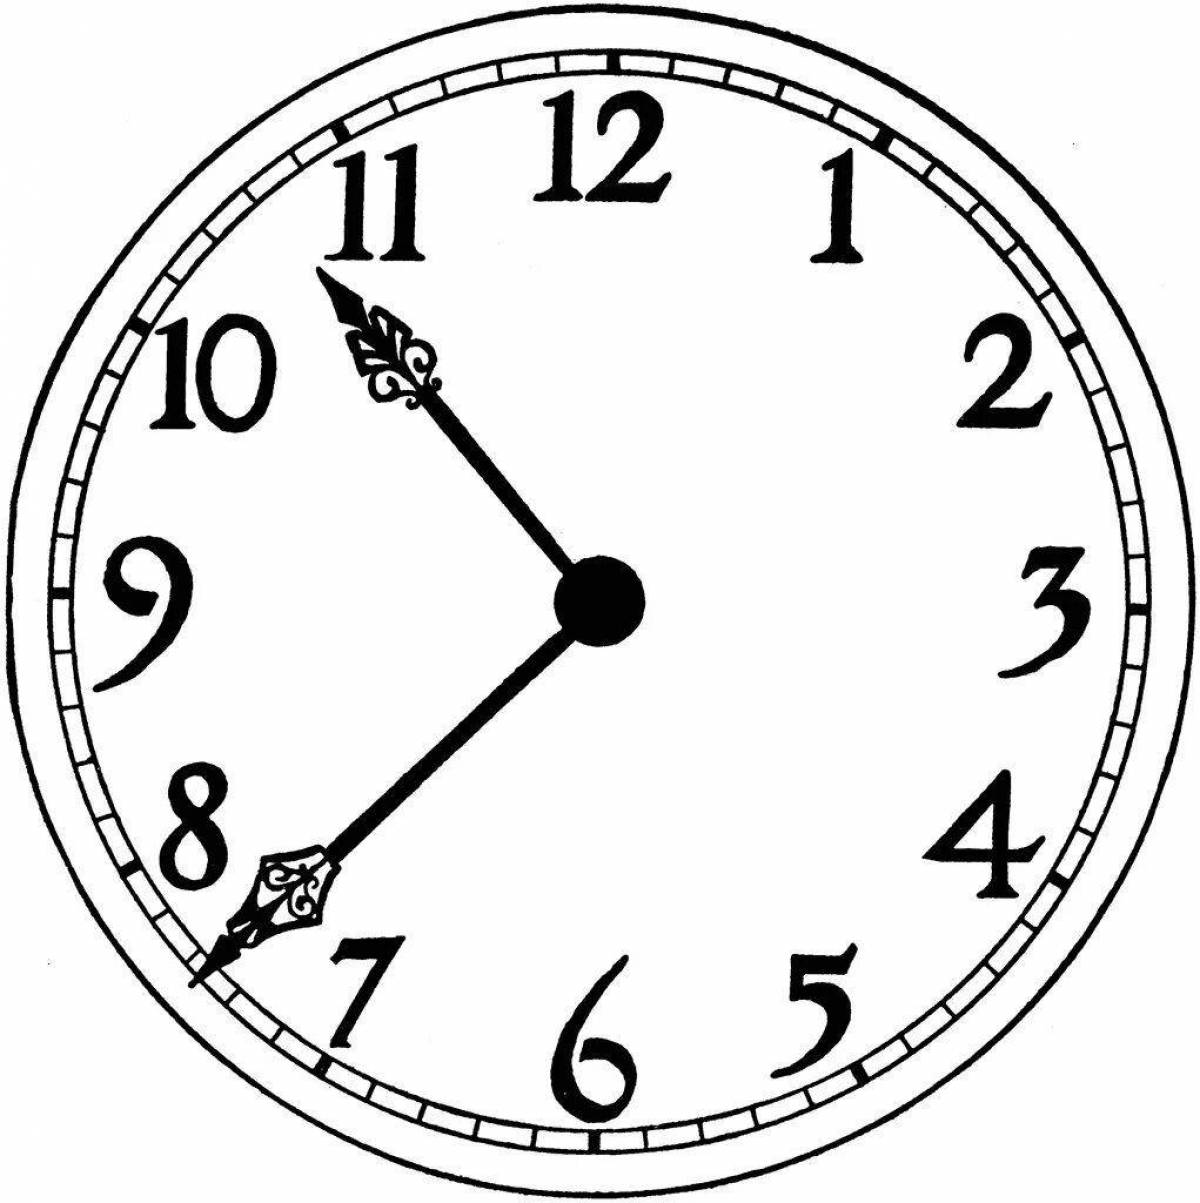 Черно белый циферблат. Часы раскраска. Часы раскраска для детей. Часы черно-белая для детей. Циферблат часов.